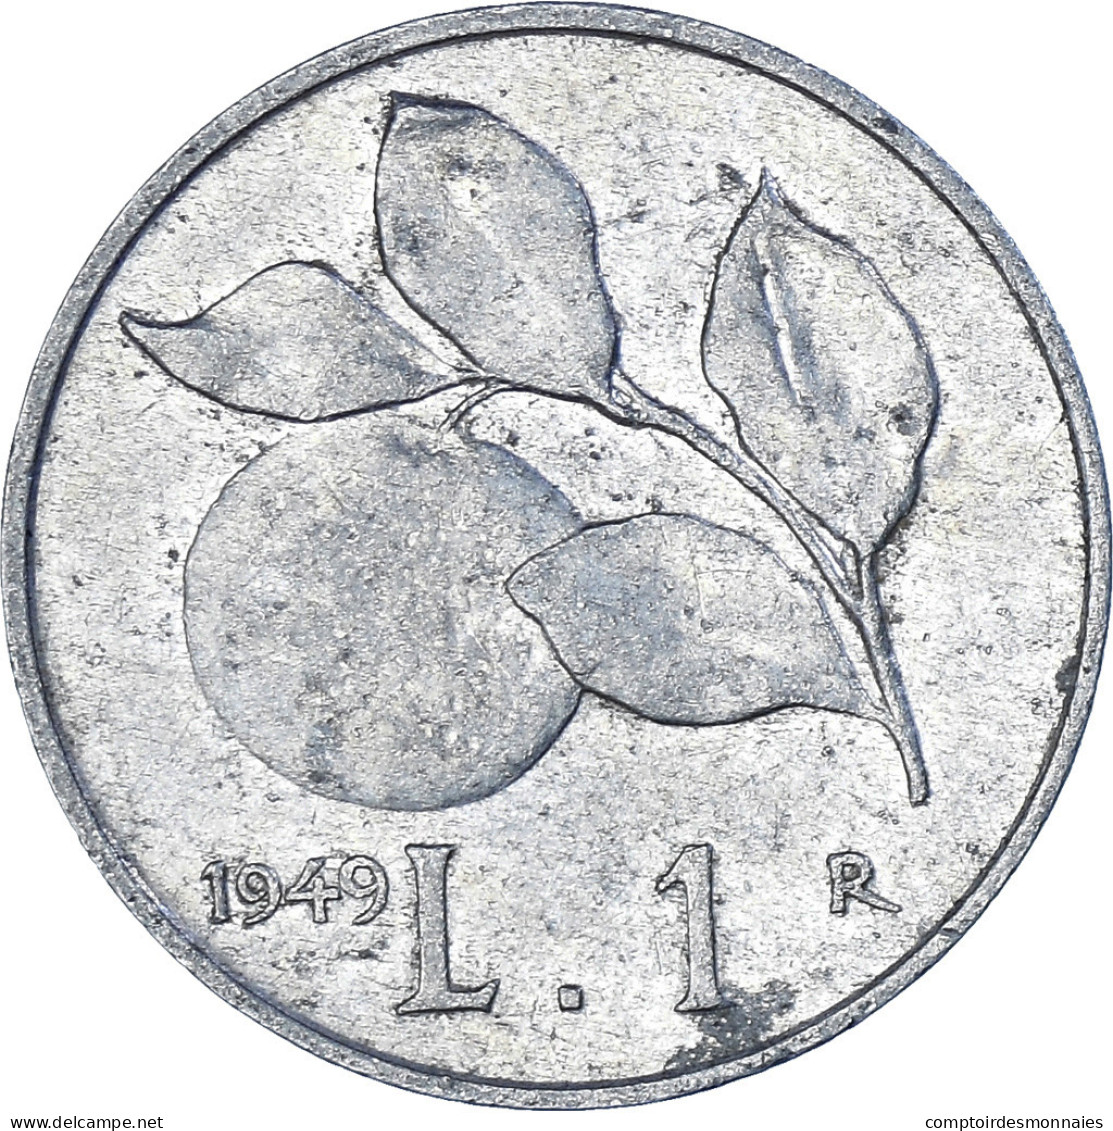 Monnaie, Italie, Lira, 1949, Rome, TB+, Aluminium, KM:87 - 1 Lira